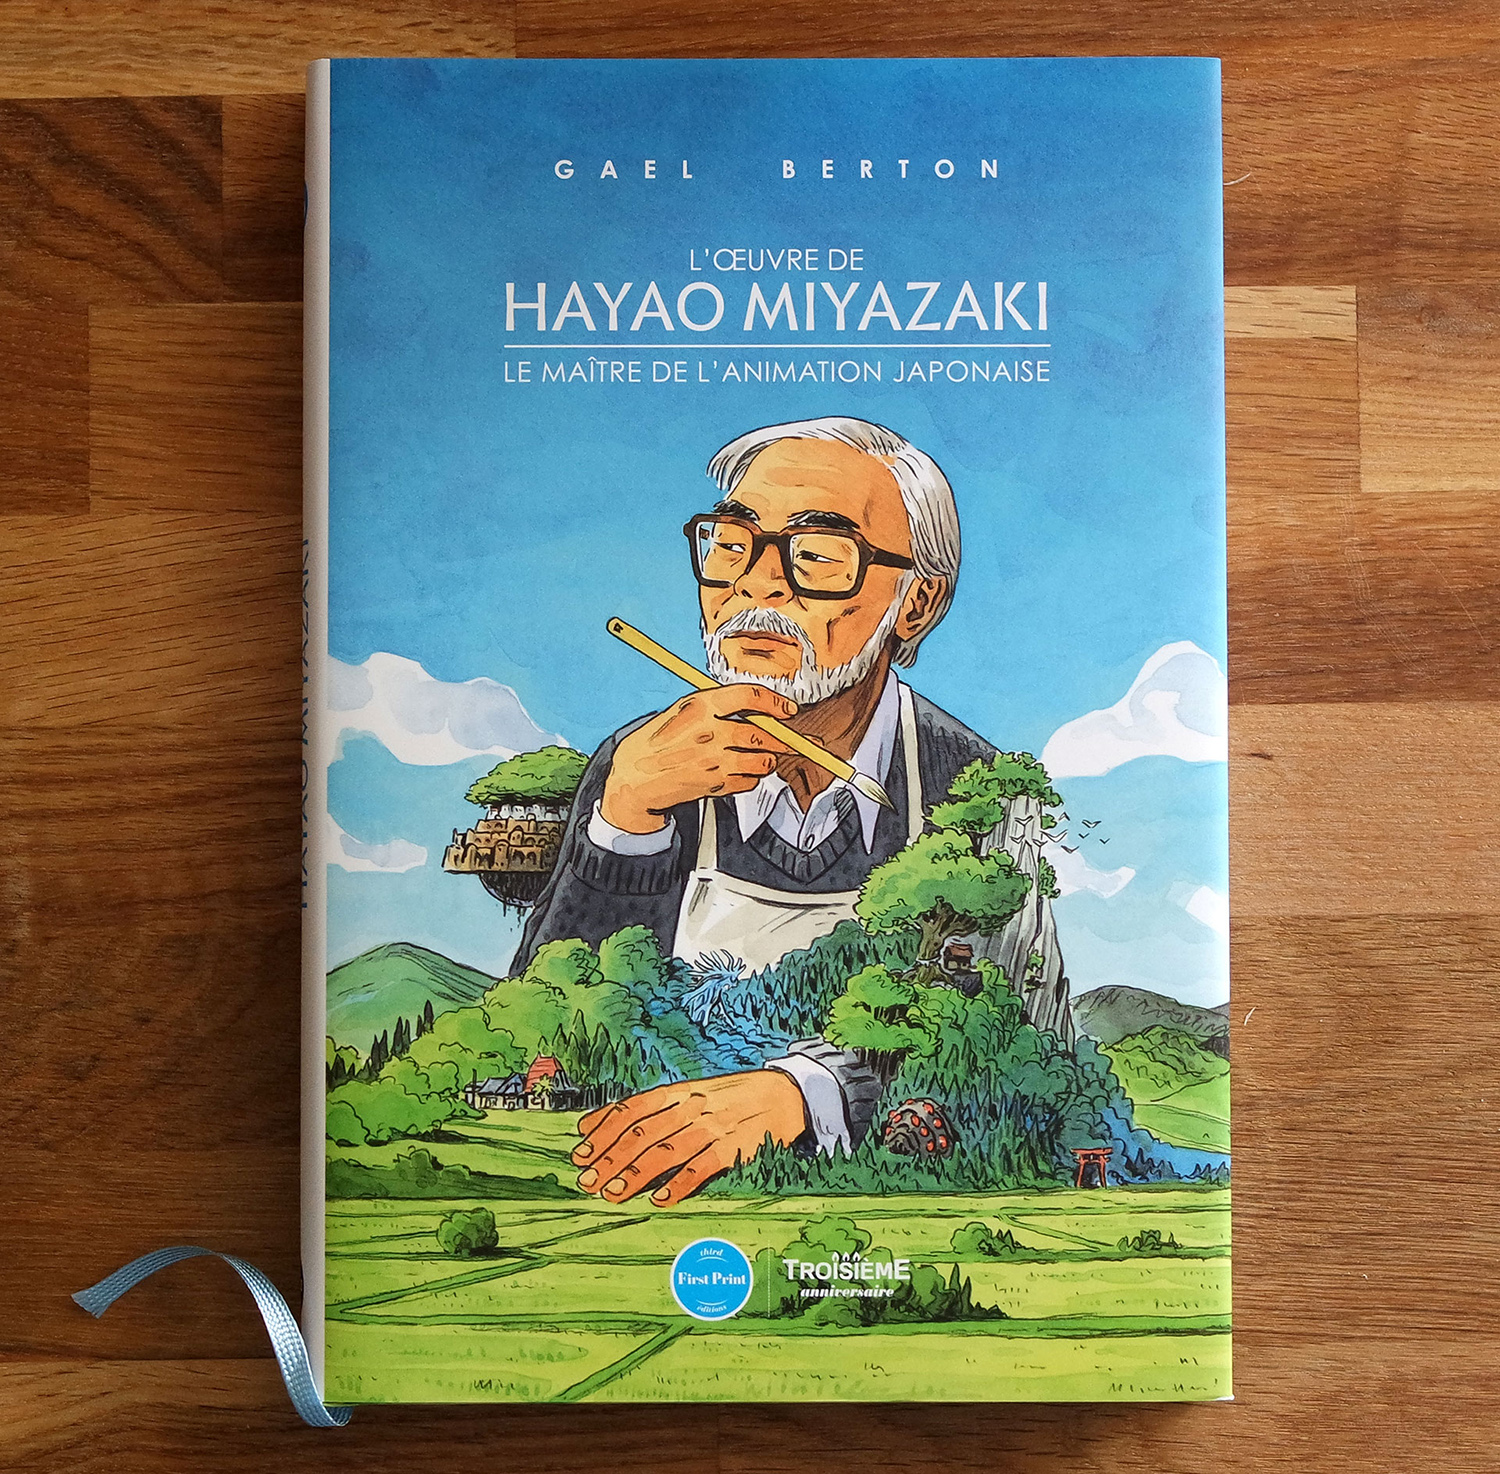 book about Hayao Miyazaki